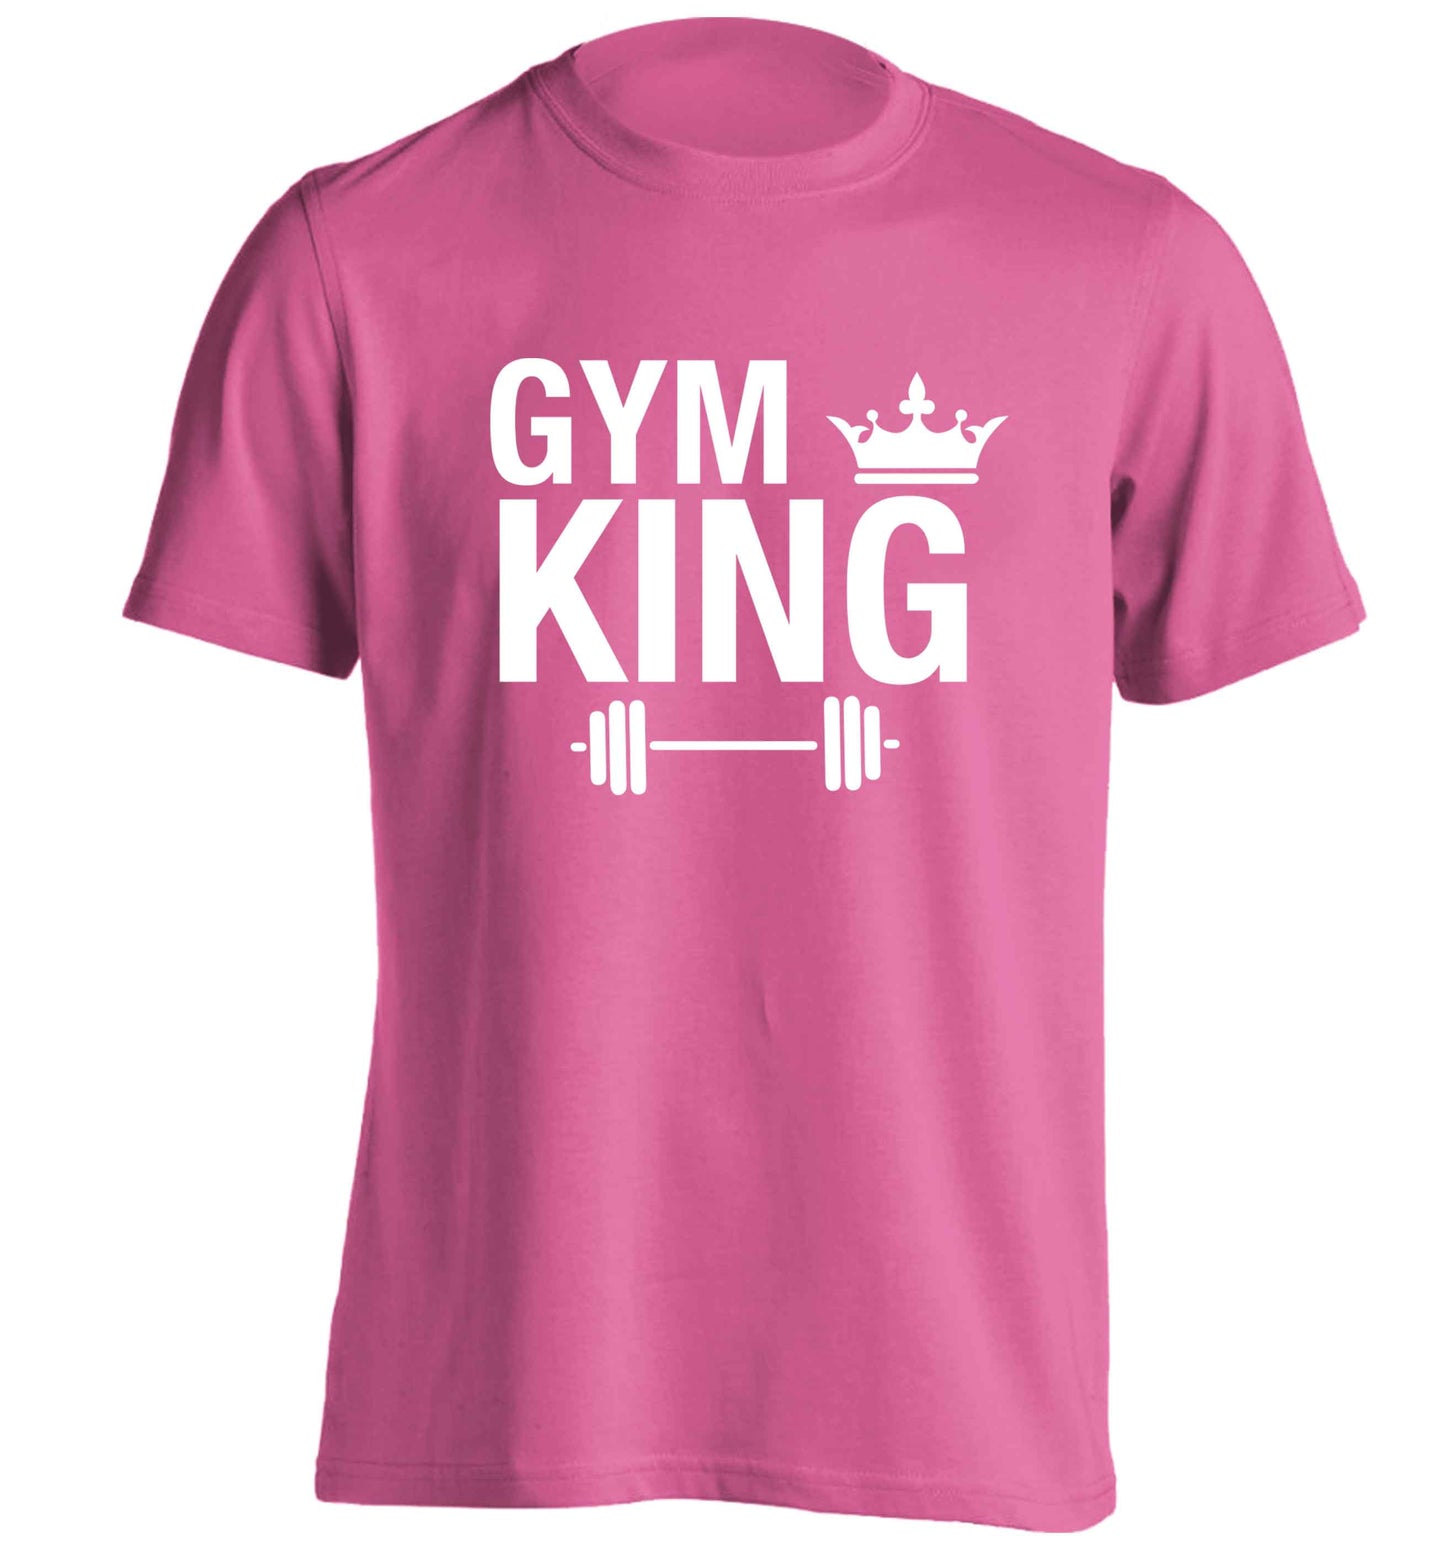 Gym king adults unisex pink Tshirt 2XL